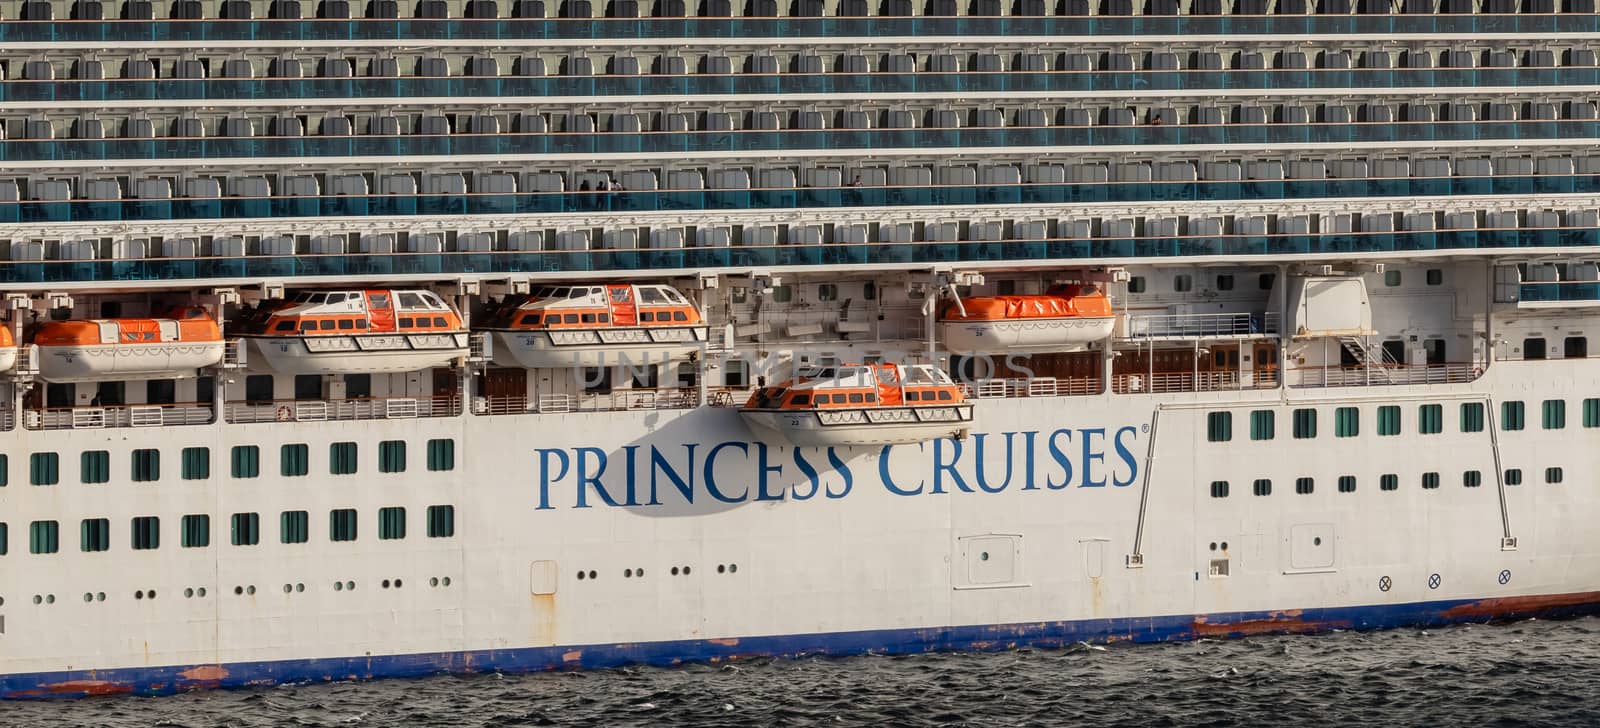 Close view of Emerald Princess cruise ship by DamantisZ